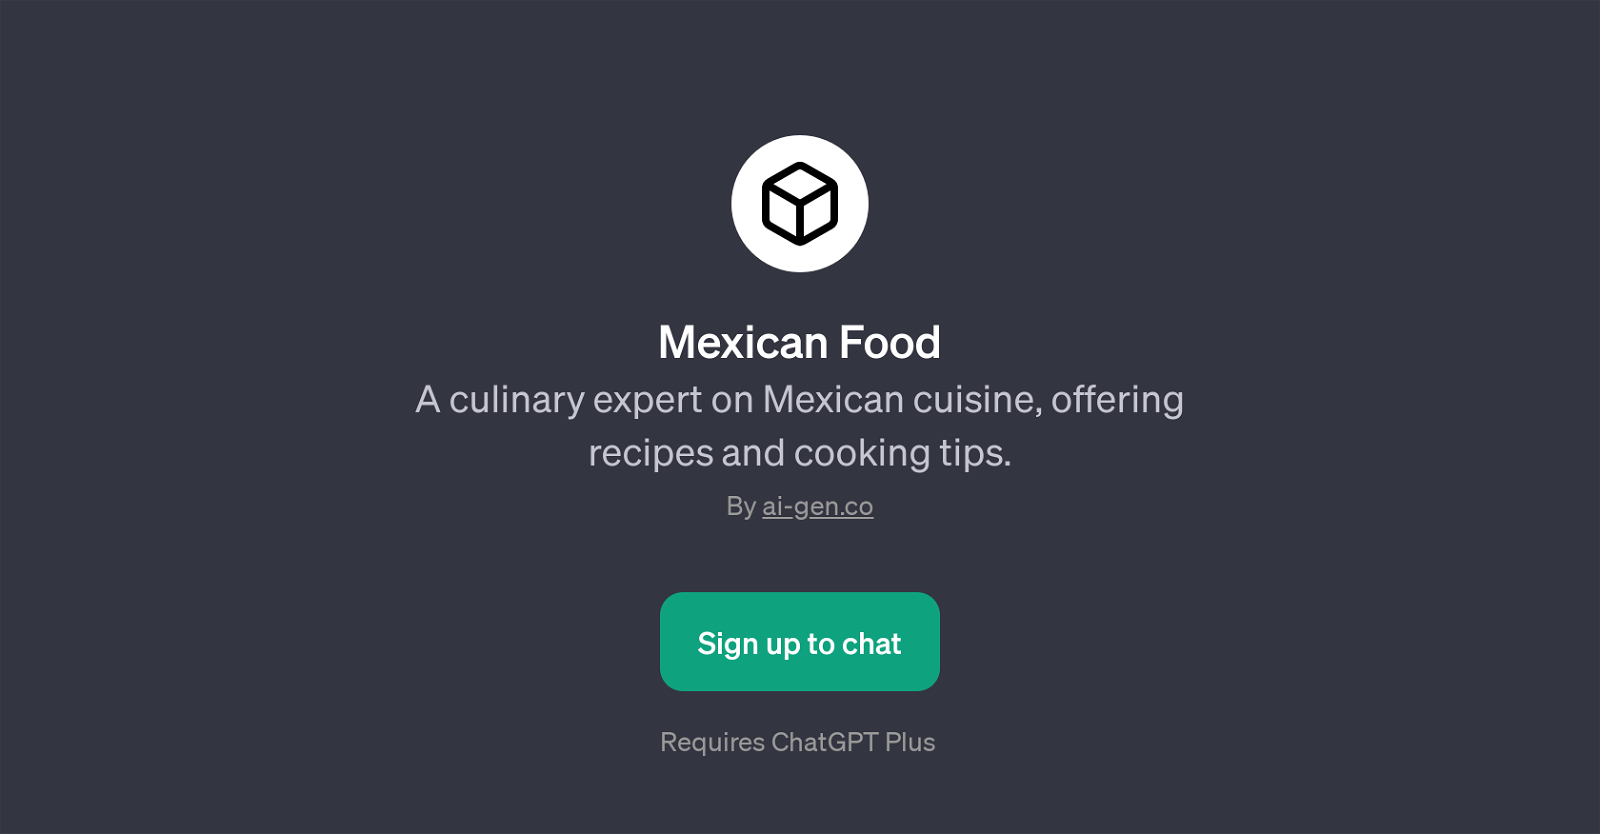 Mexican Food website